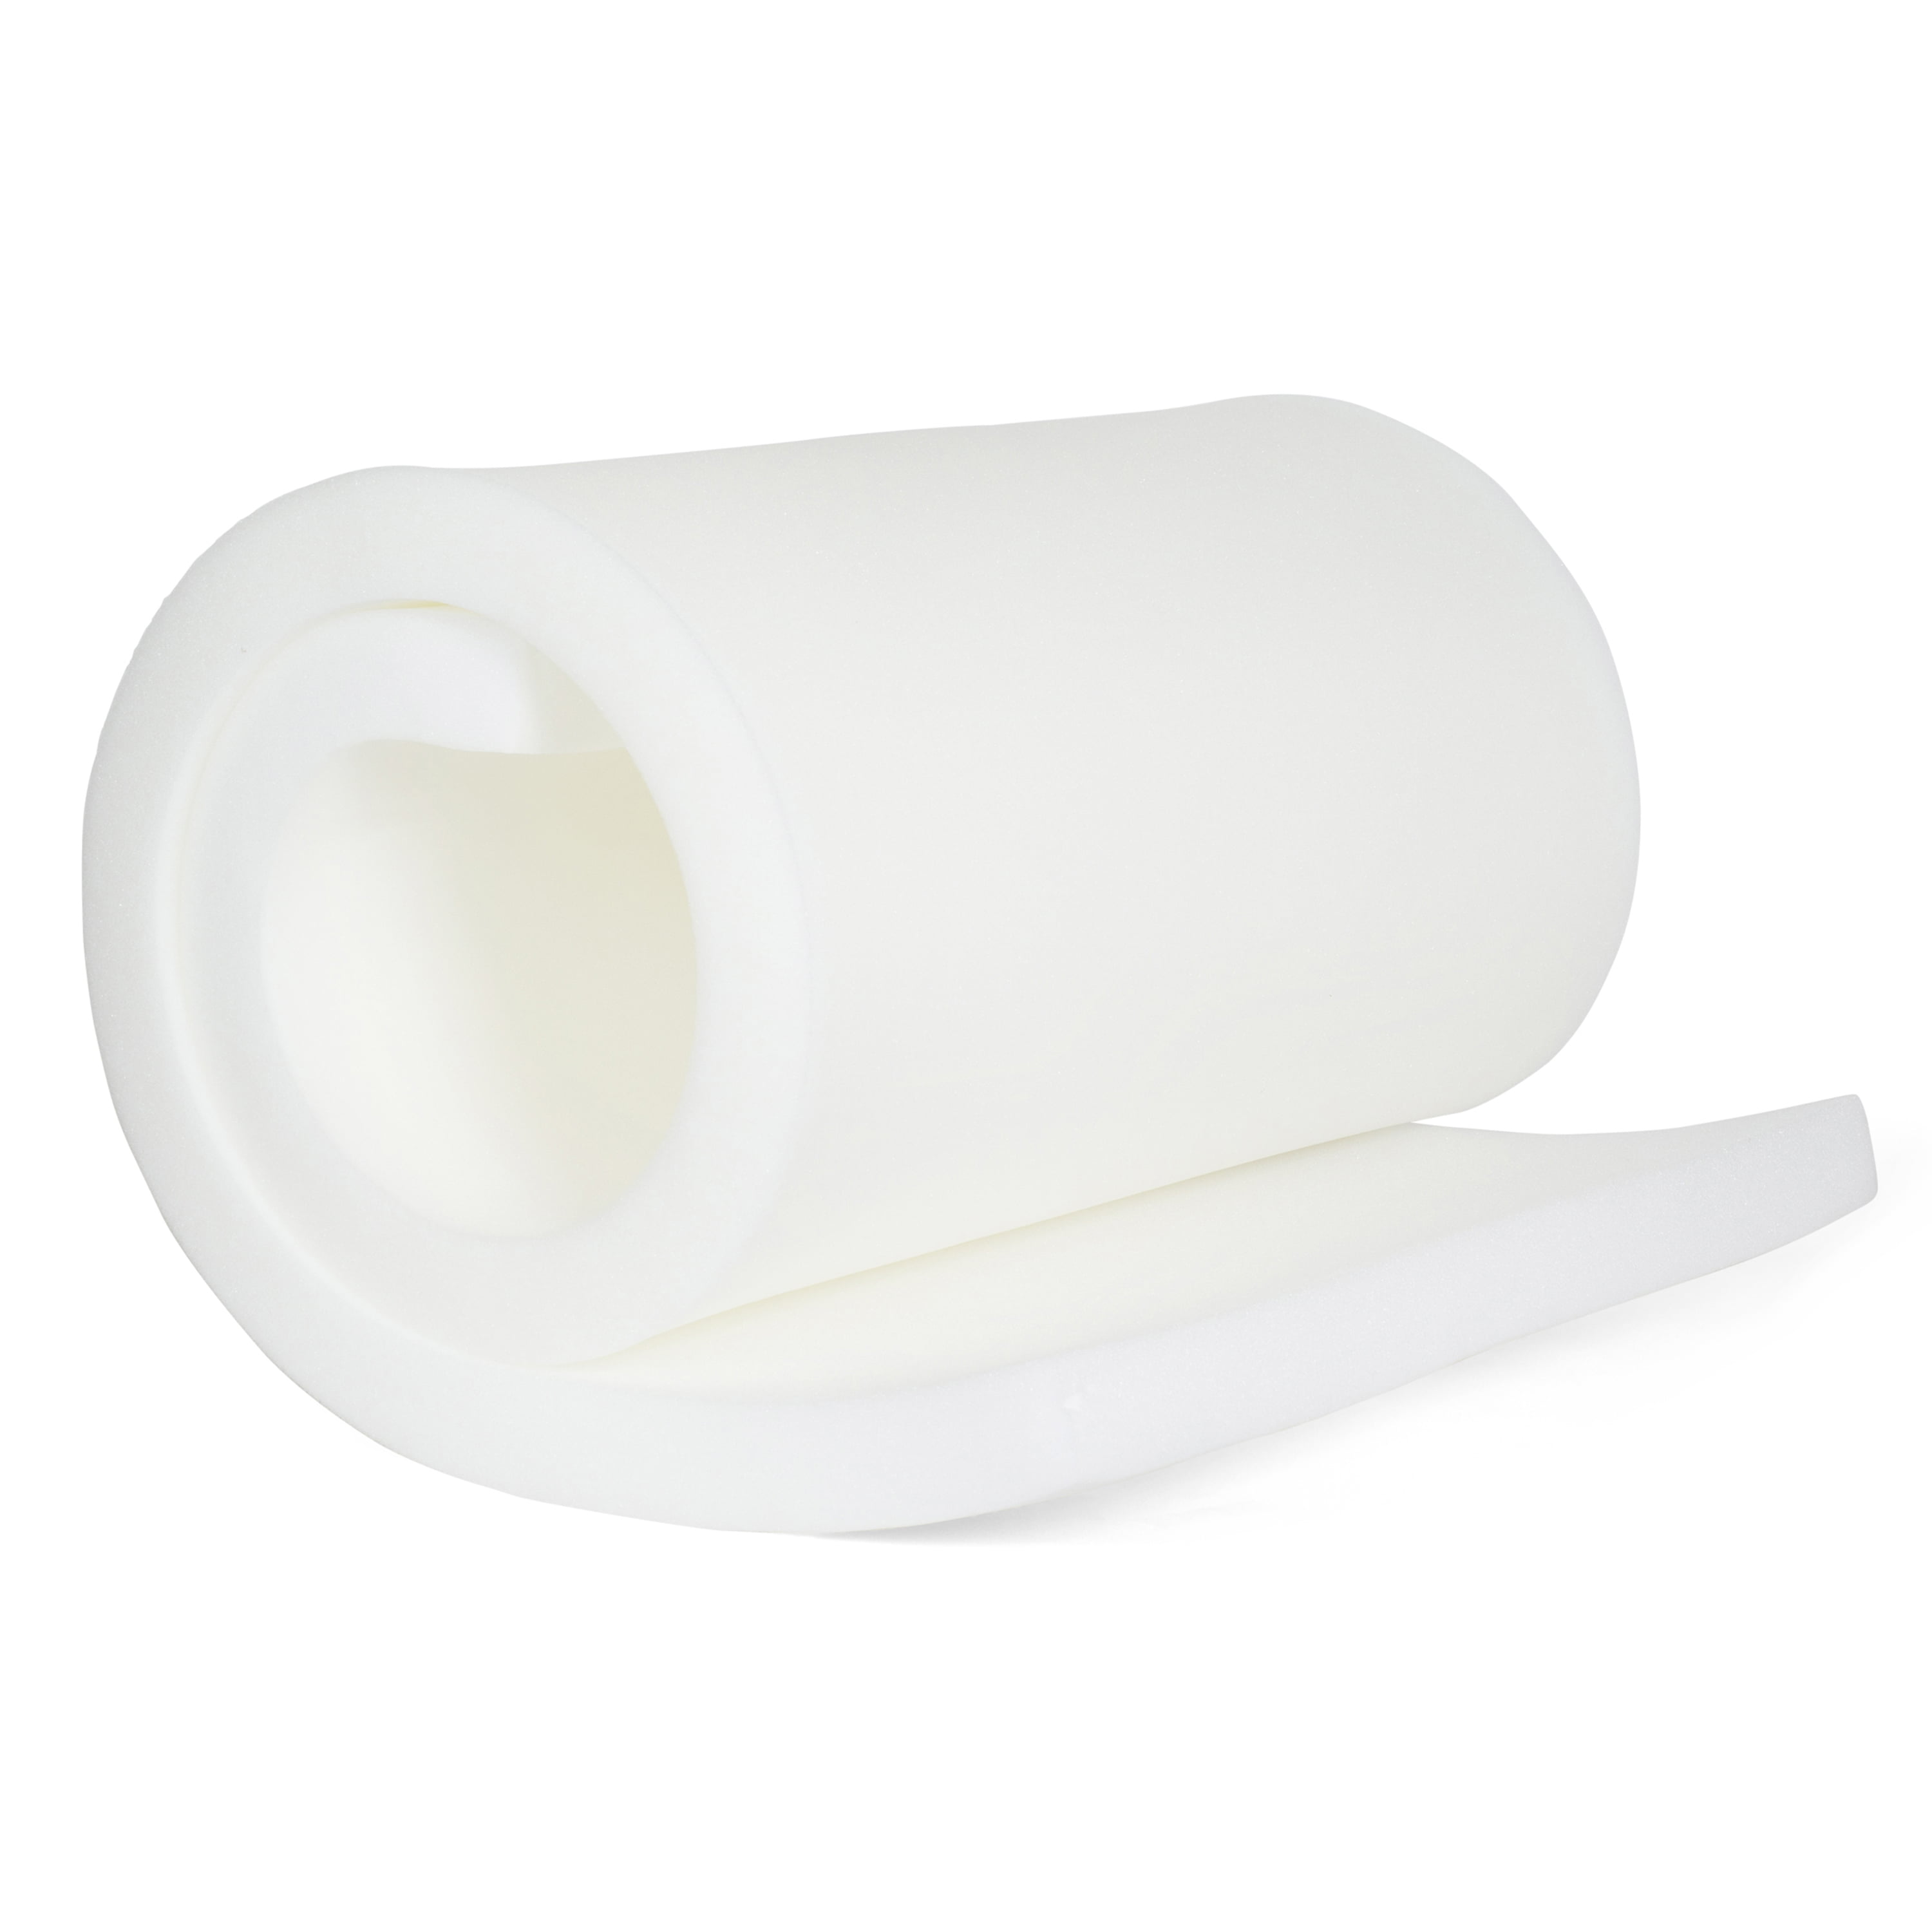 Padding Foam Solutions  Custom Pad Foam Products